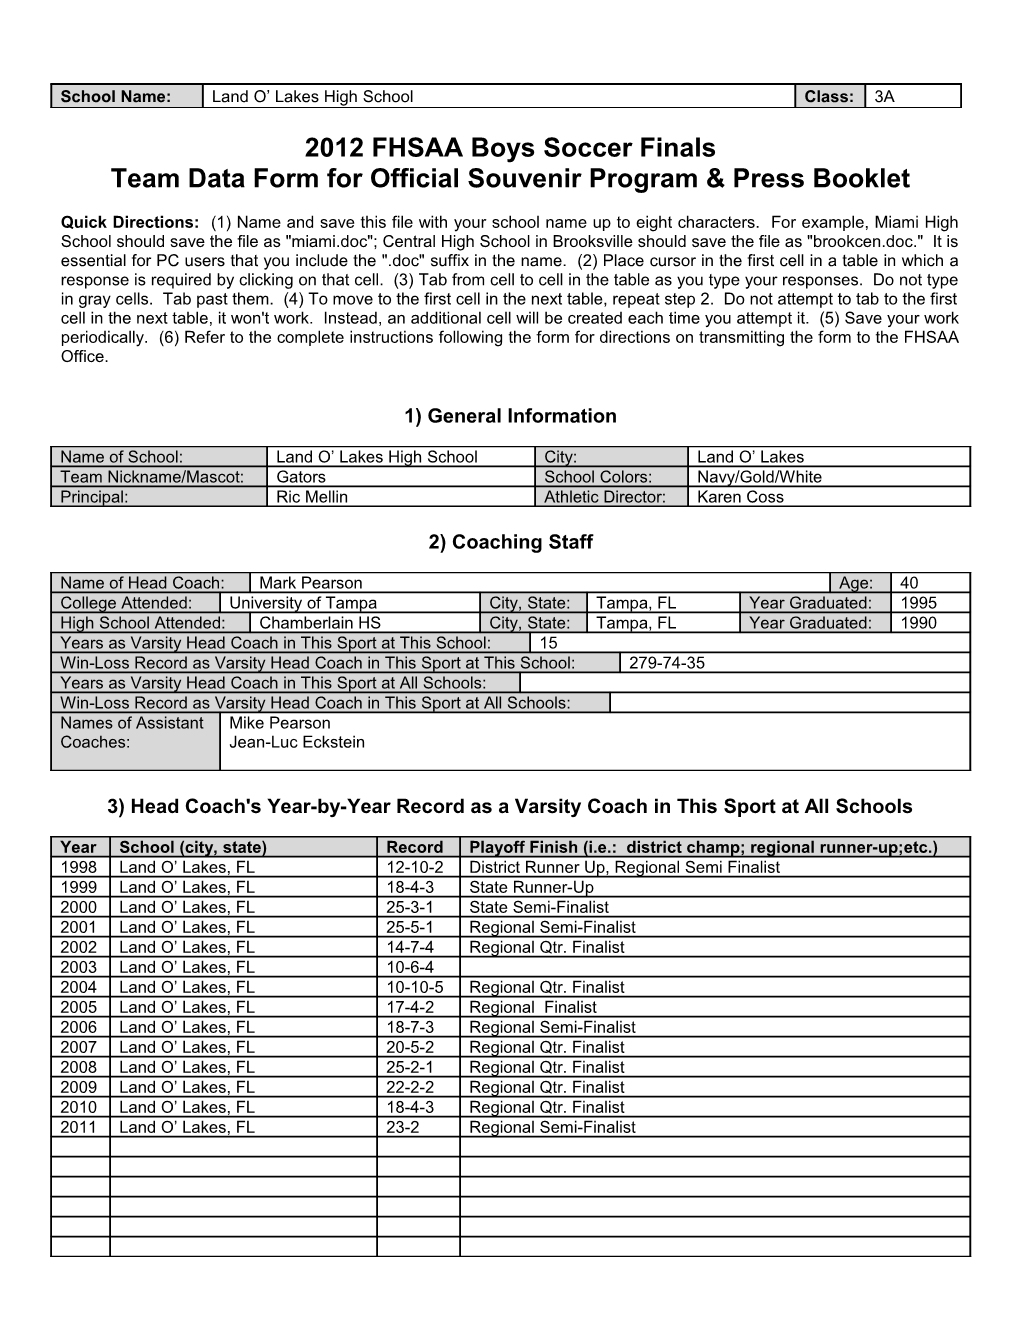 Team Data Form for Official Souvenir Program & Press Booklet s11